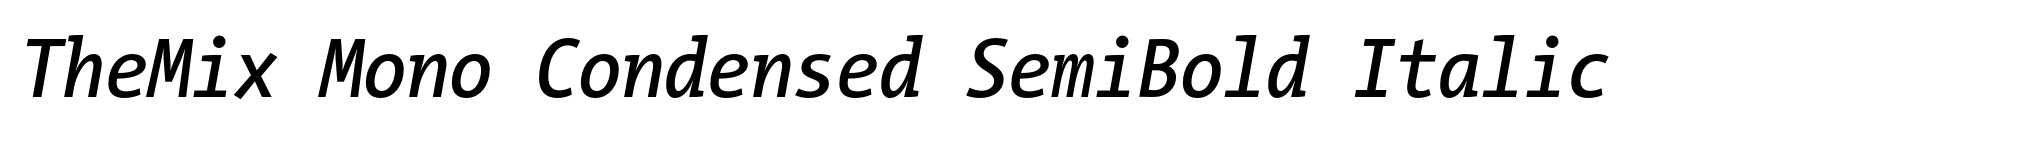 TheMix Mono Condensed SemiBold Italic image